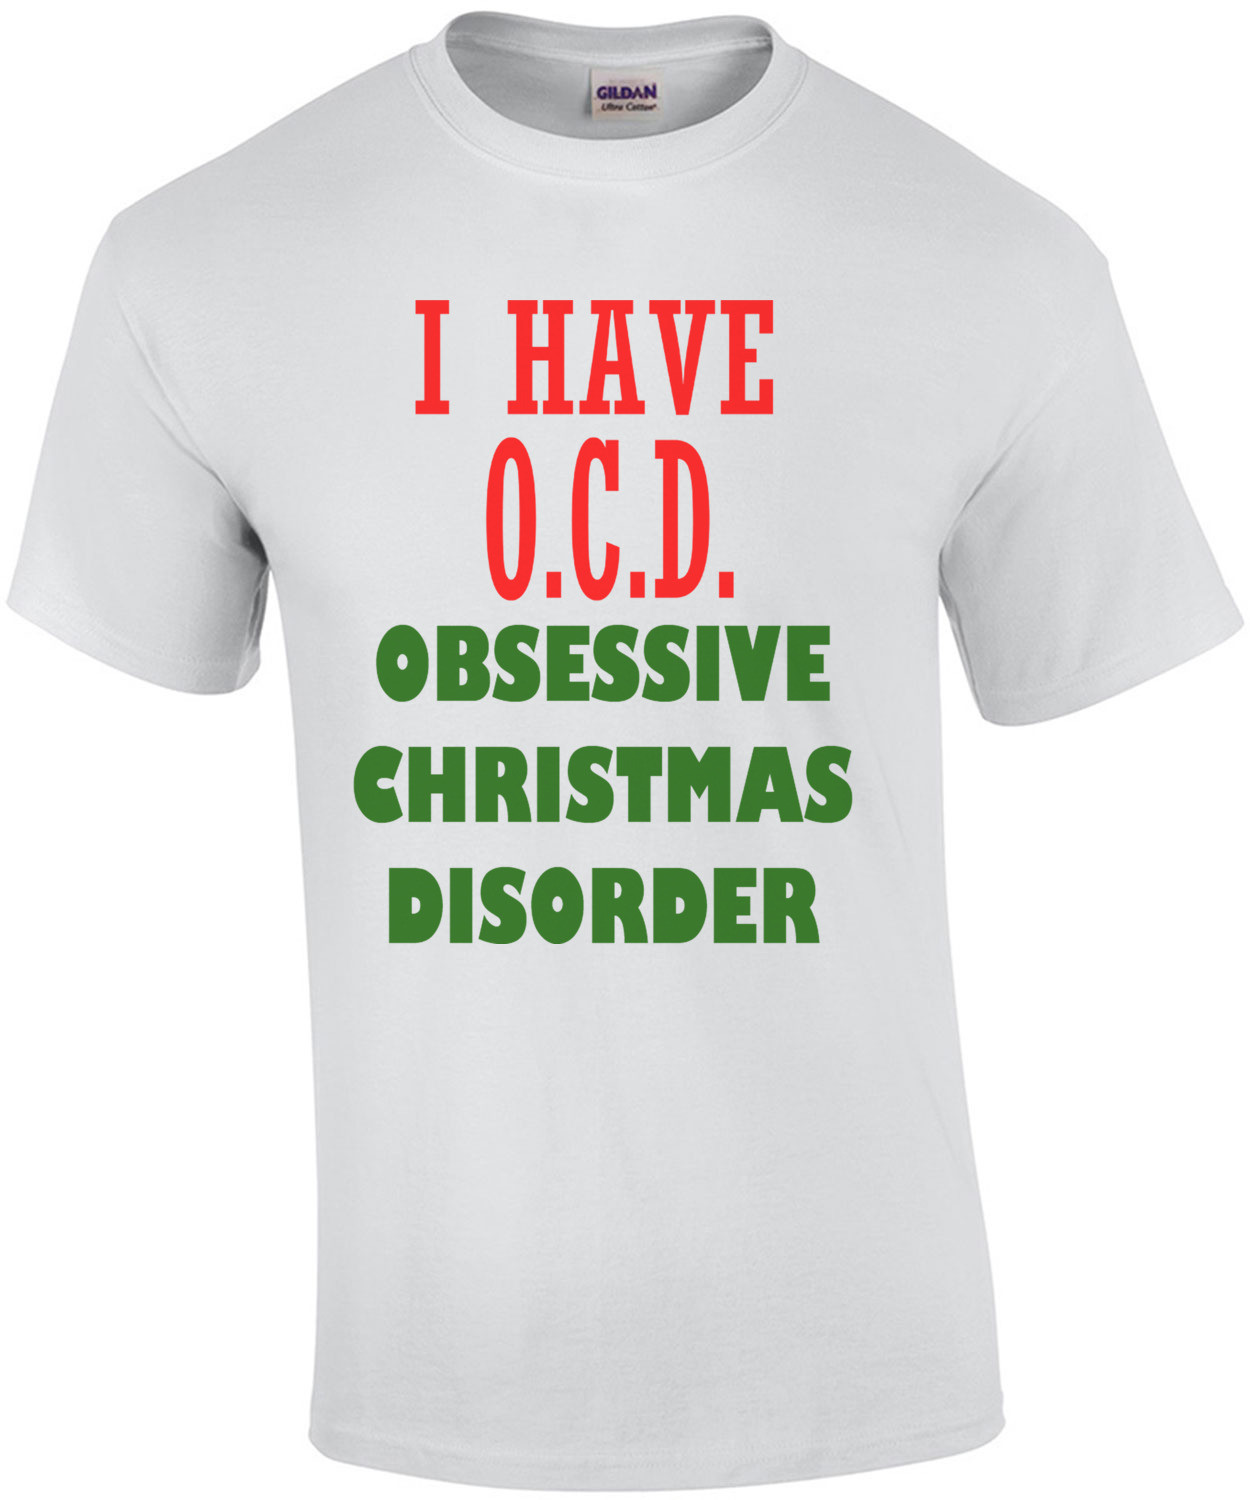 I Have OCD Obsessive Christmas Disorder Shirt